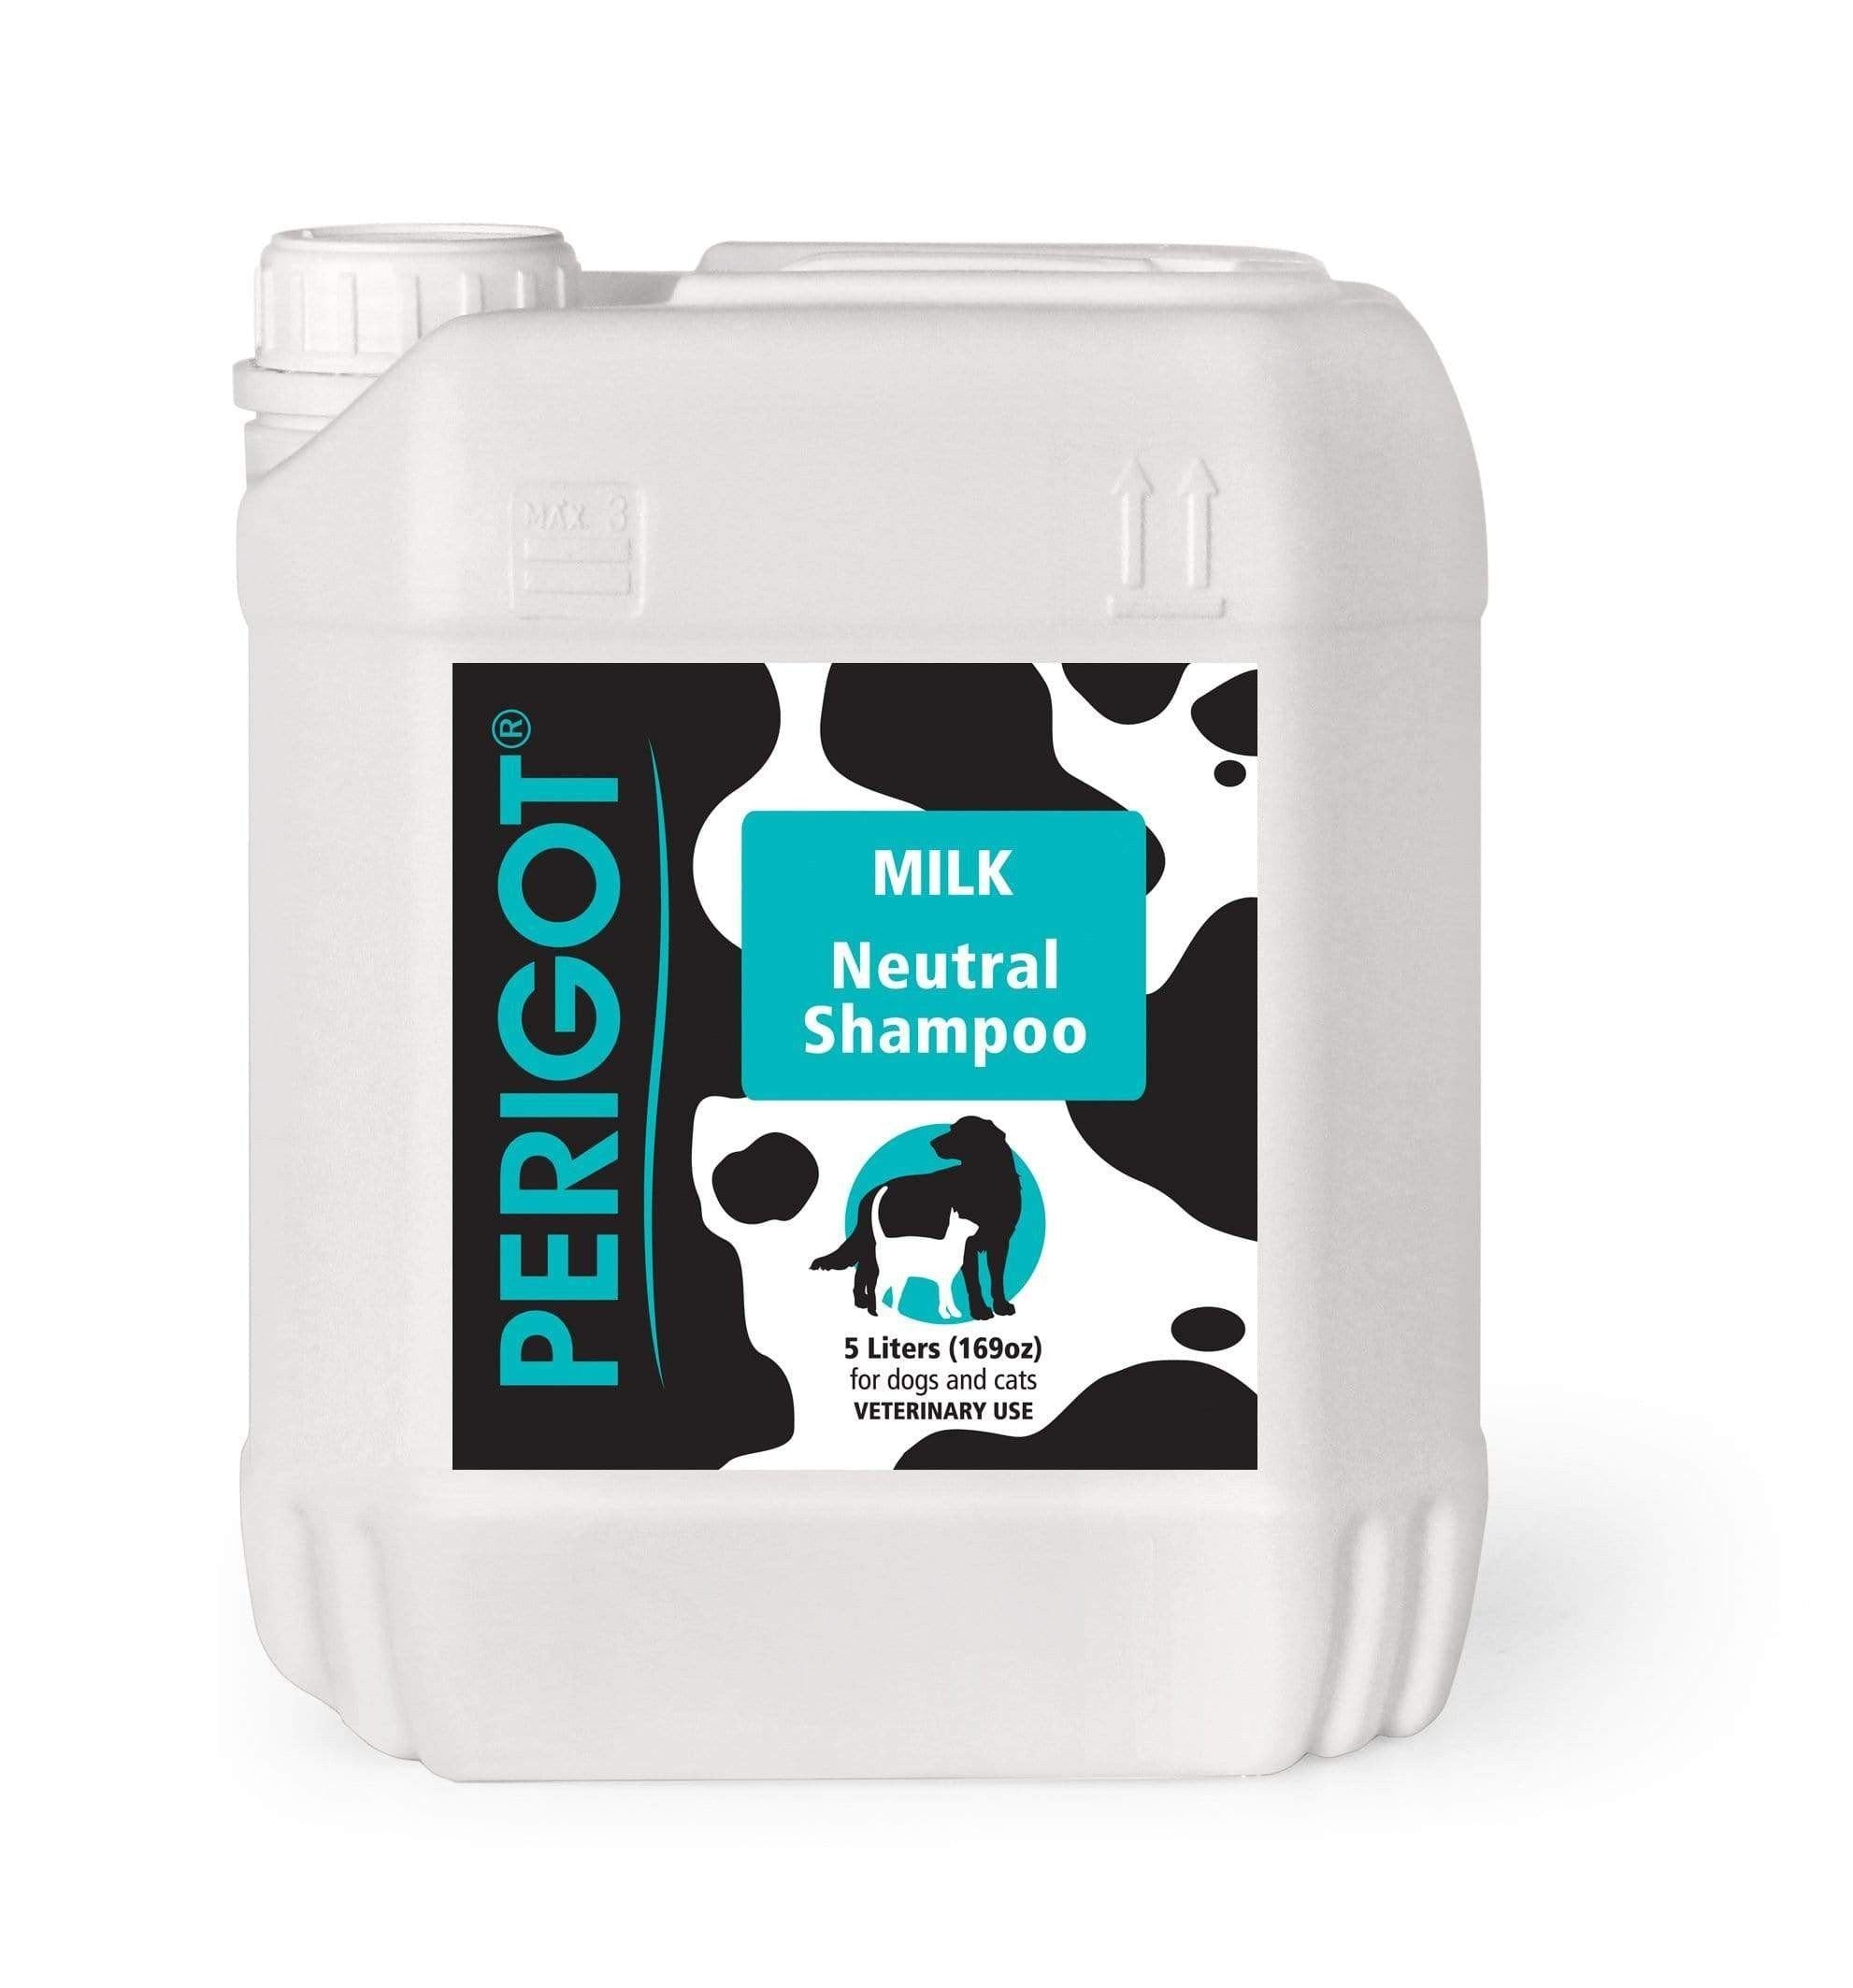 Perigot - Neutral Milk Shampoo for Dogs | Cats & Dogs